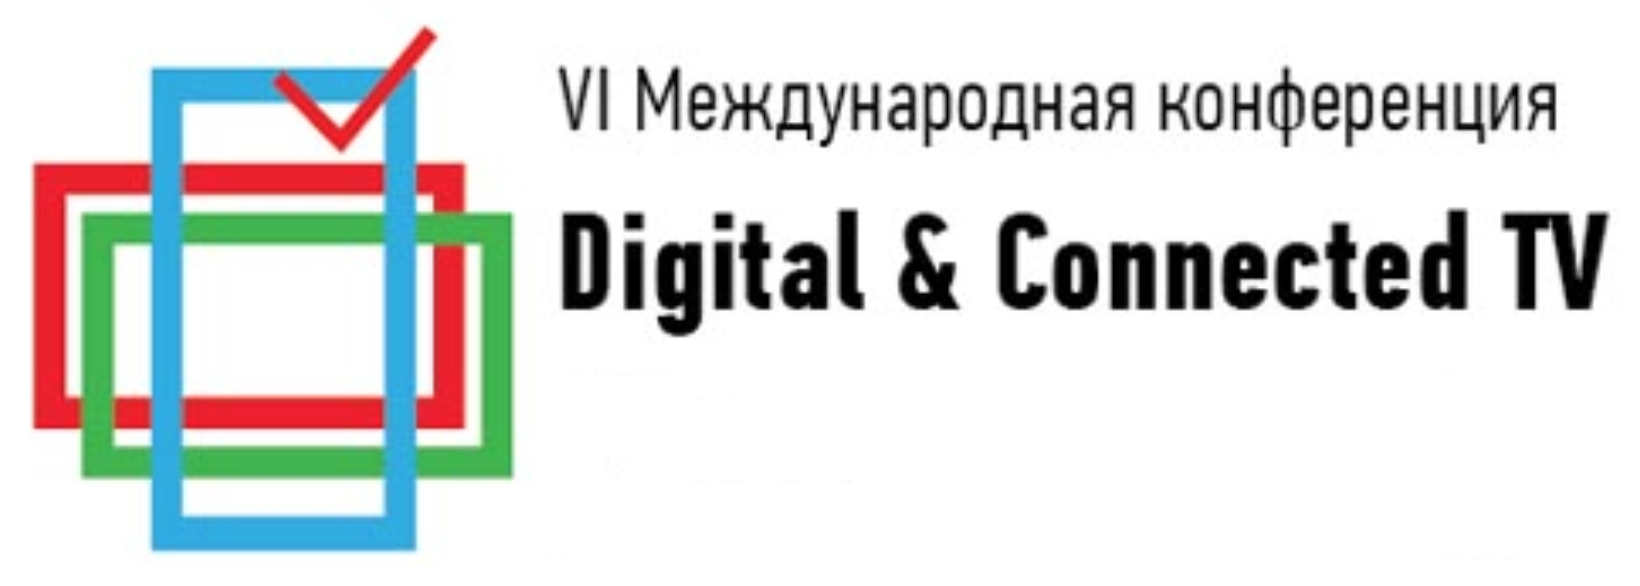 VI Международная конференция "Digital & Connected TV Russia 2015"